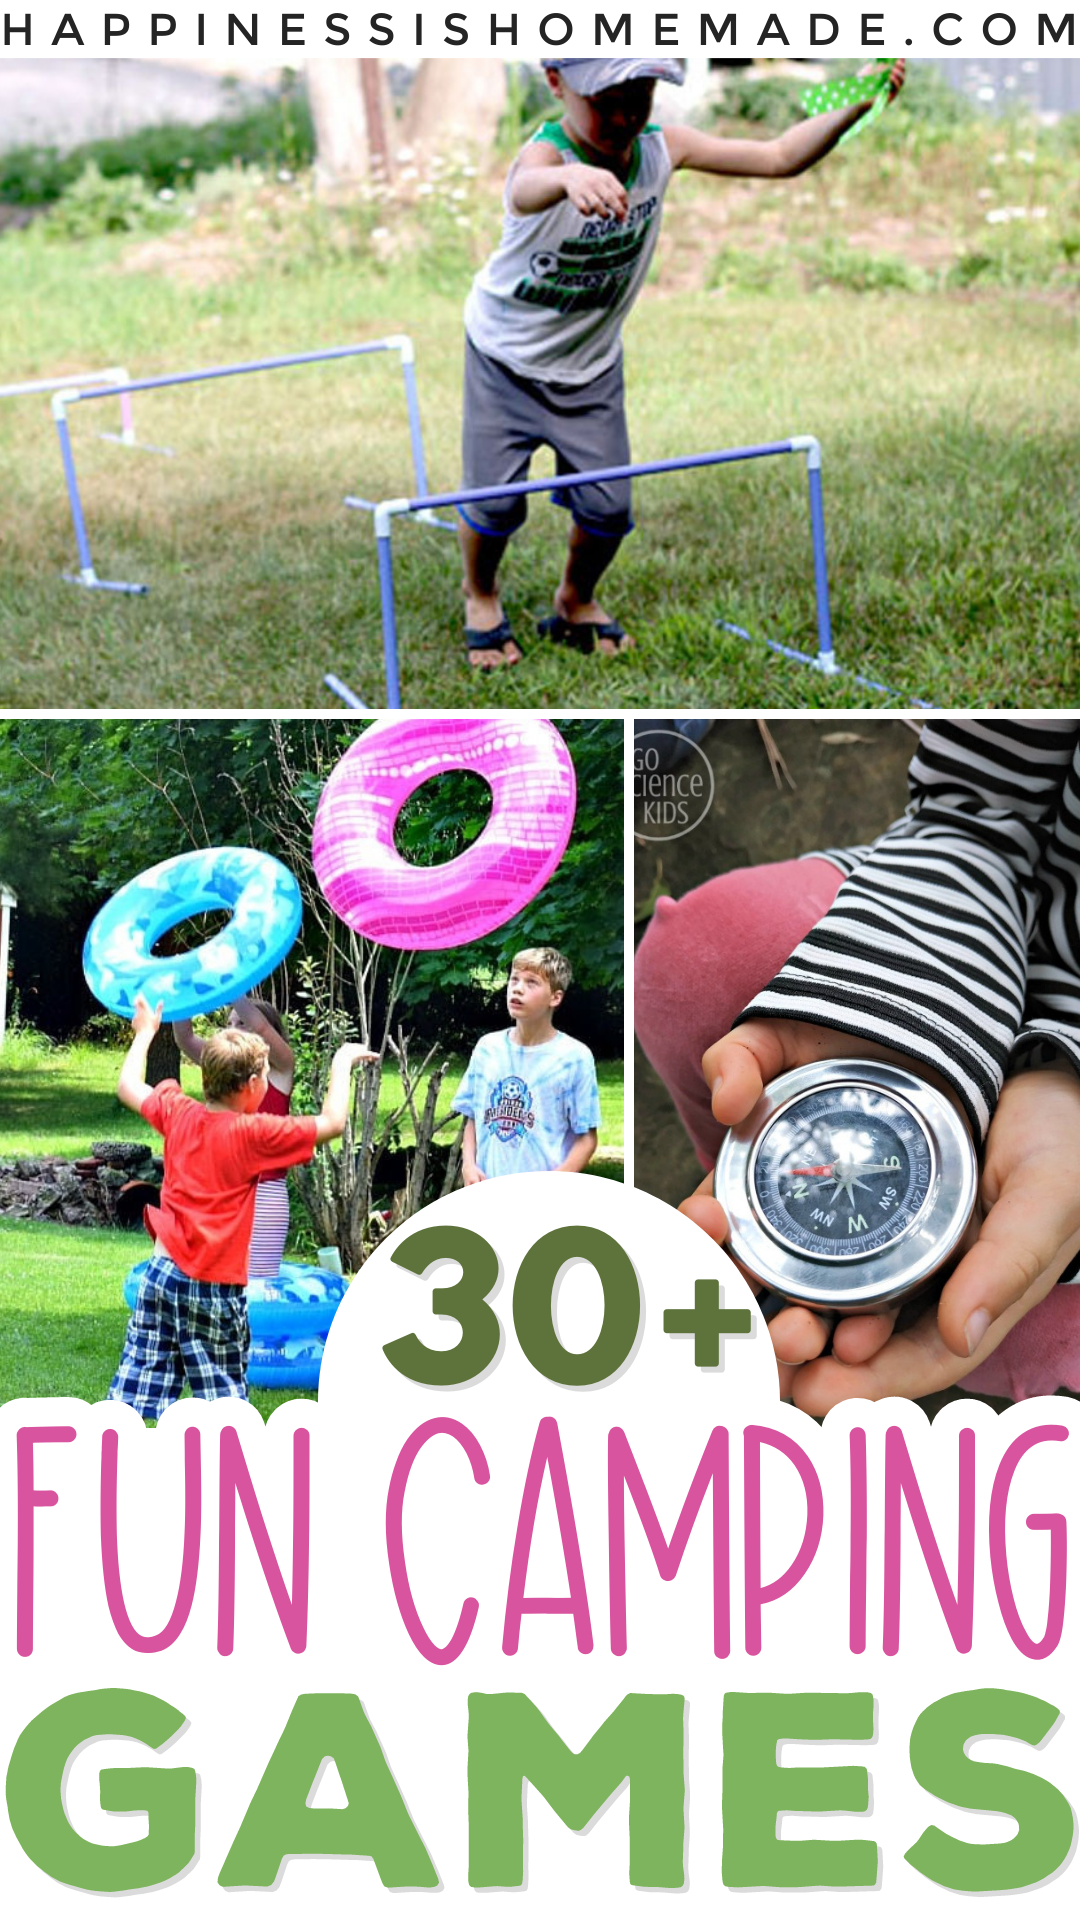 30+ Fun Camping Games